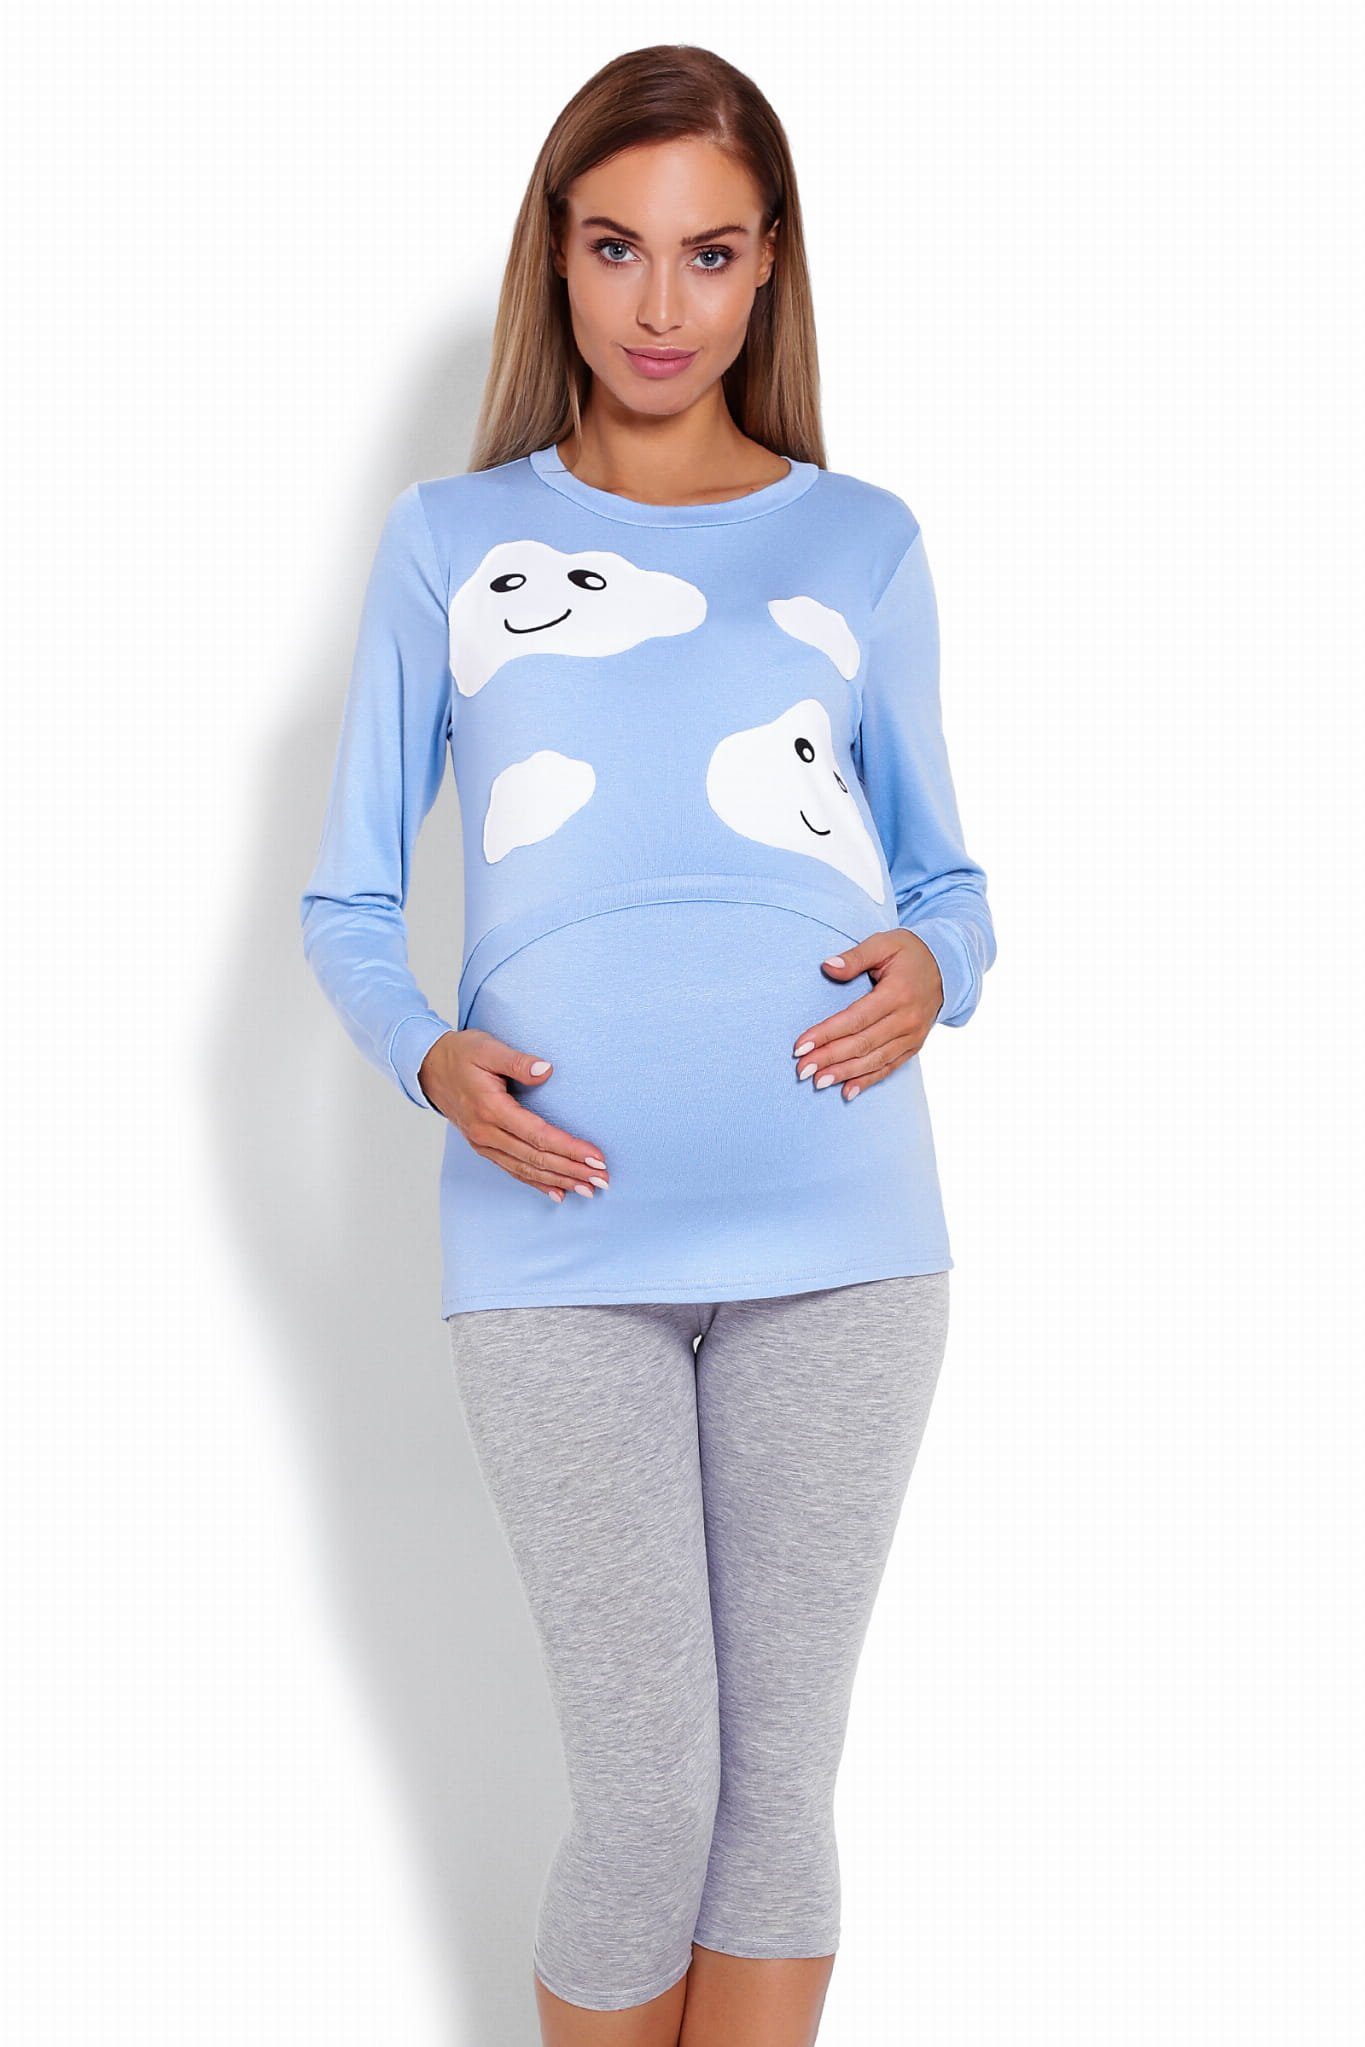 PeeKaBoo Umstandspyjama Schlafanzug Stillen Schwangerschaft Stillschlafanzug blau/grau